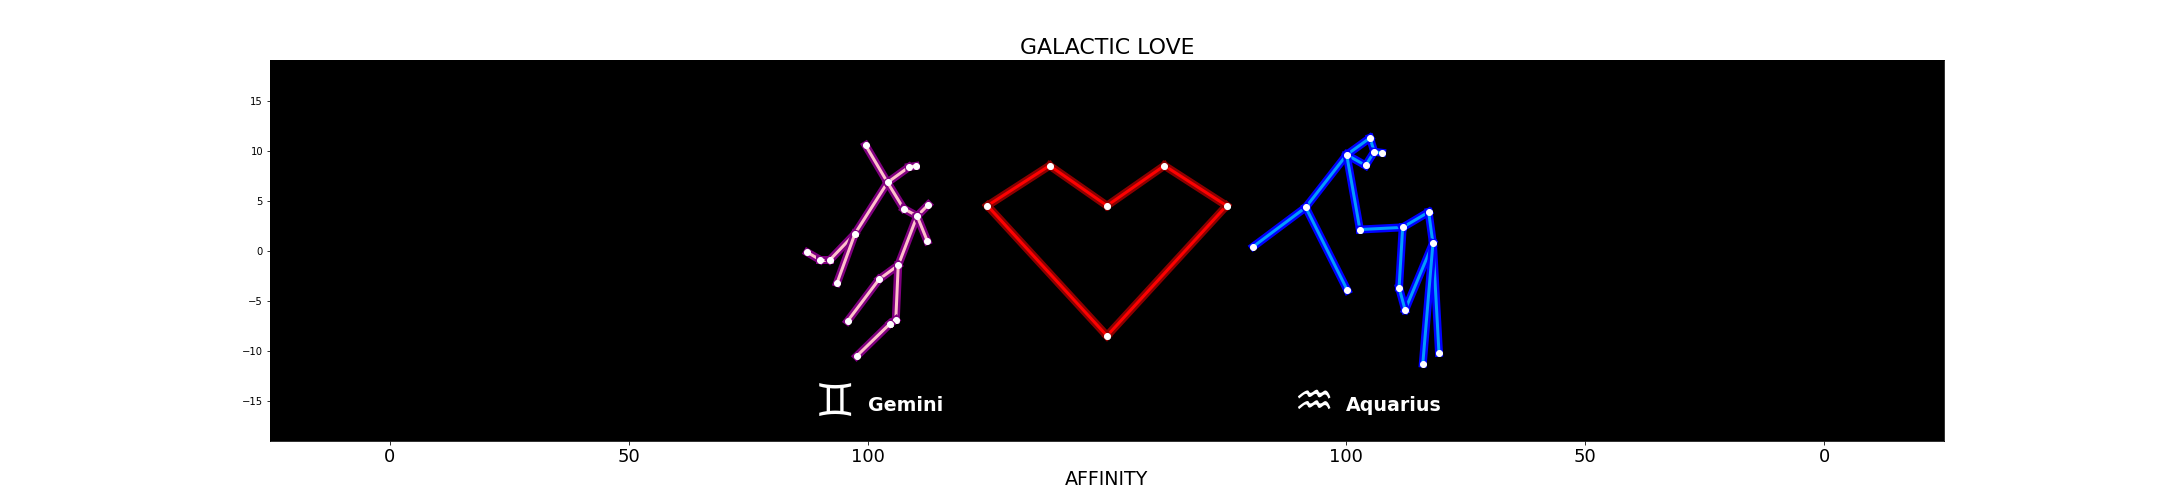 expected-love-Gemini-Aquarius.png